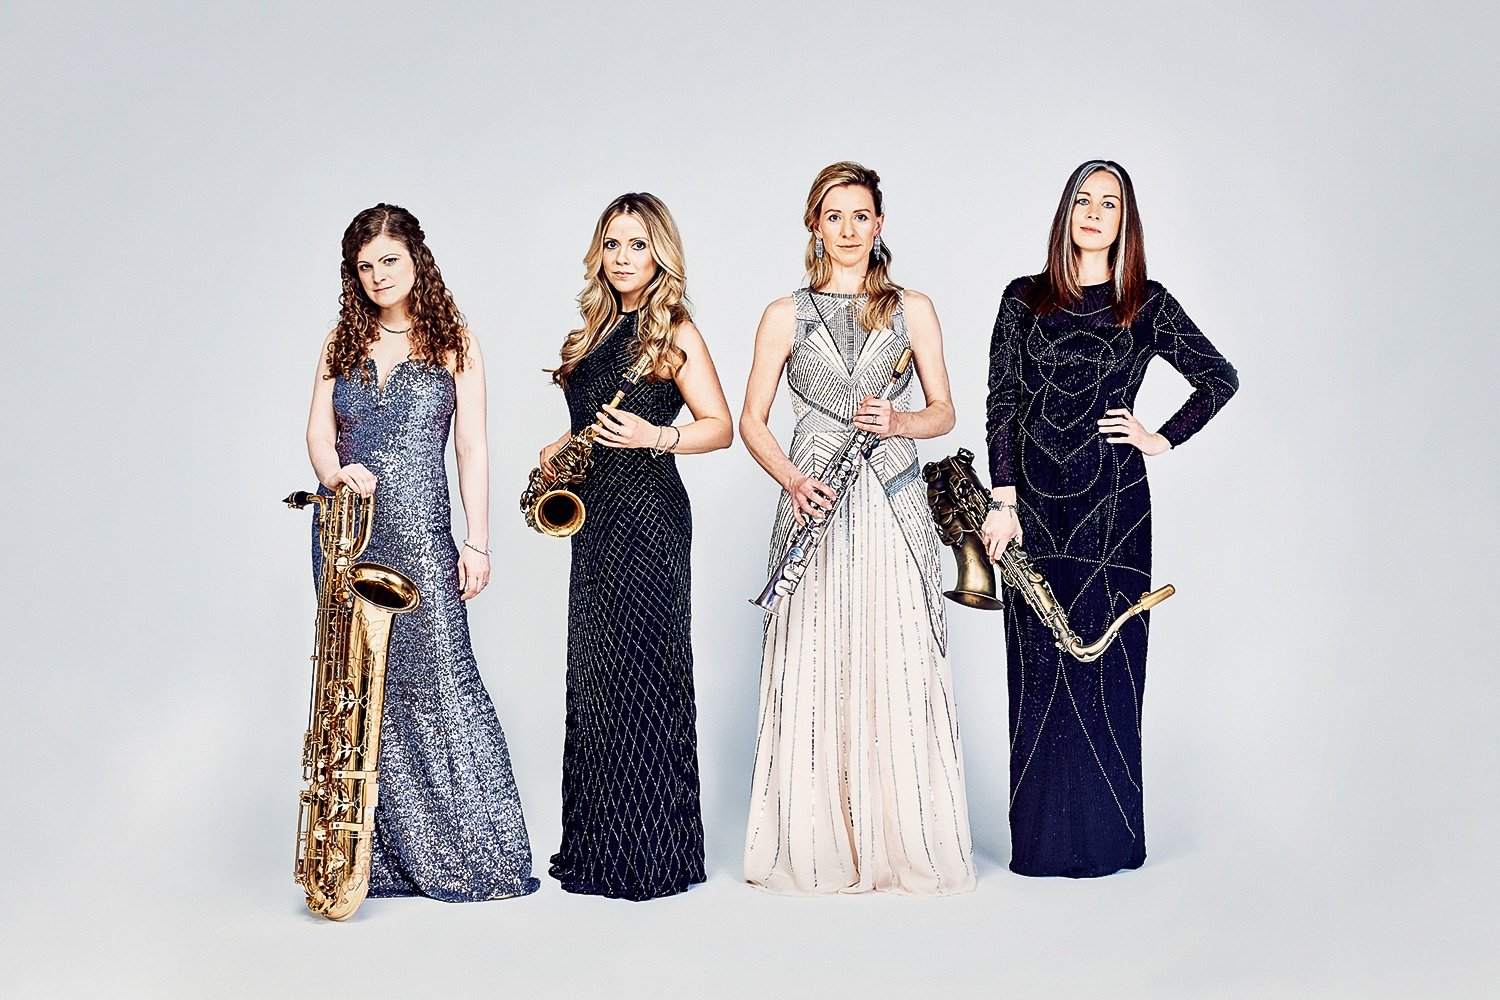 Promo London Saxes Saxophone Quartet London